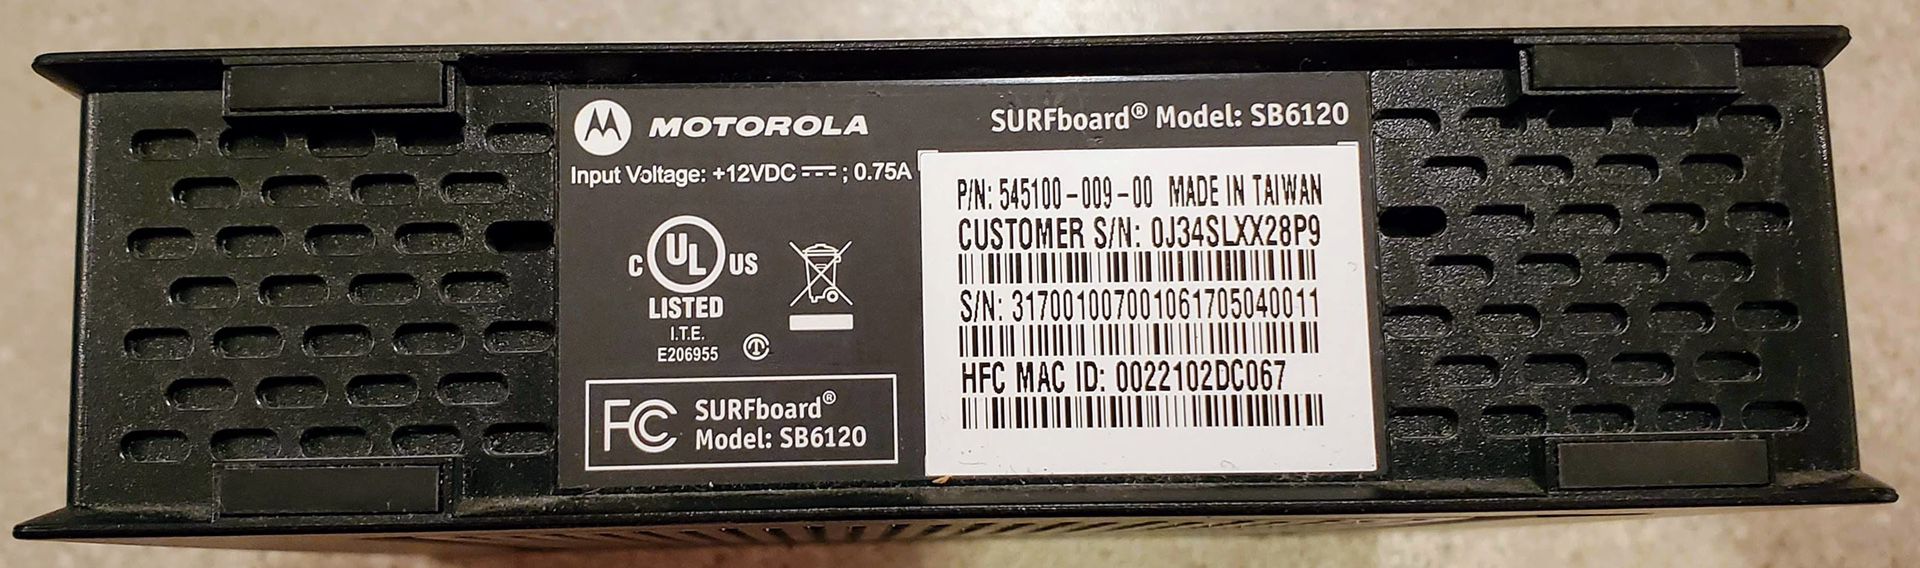 Motorola SURFboard SB6120 Cable Modem for Comcast Xfinity